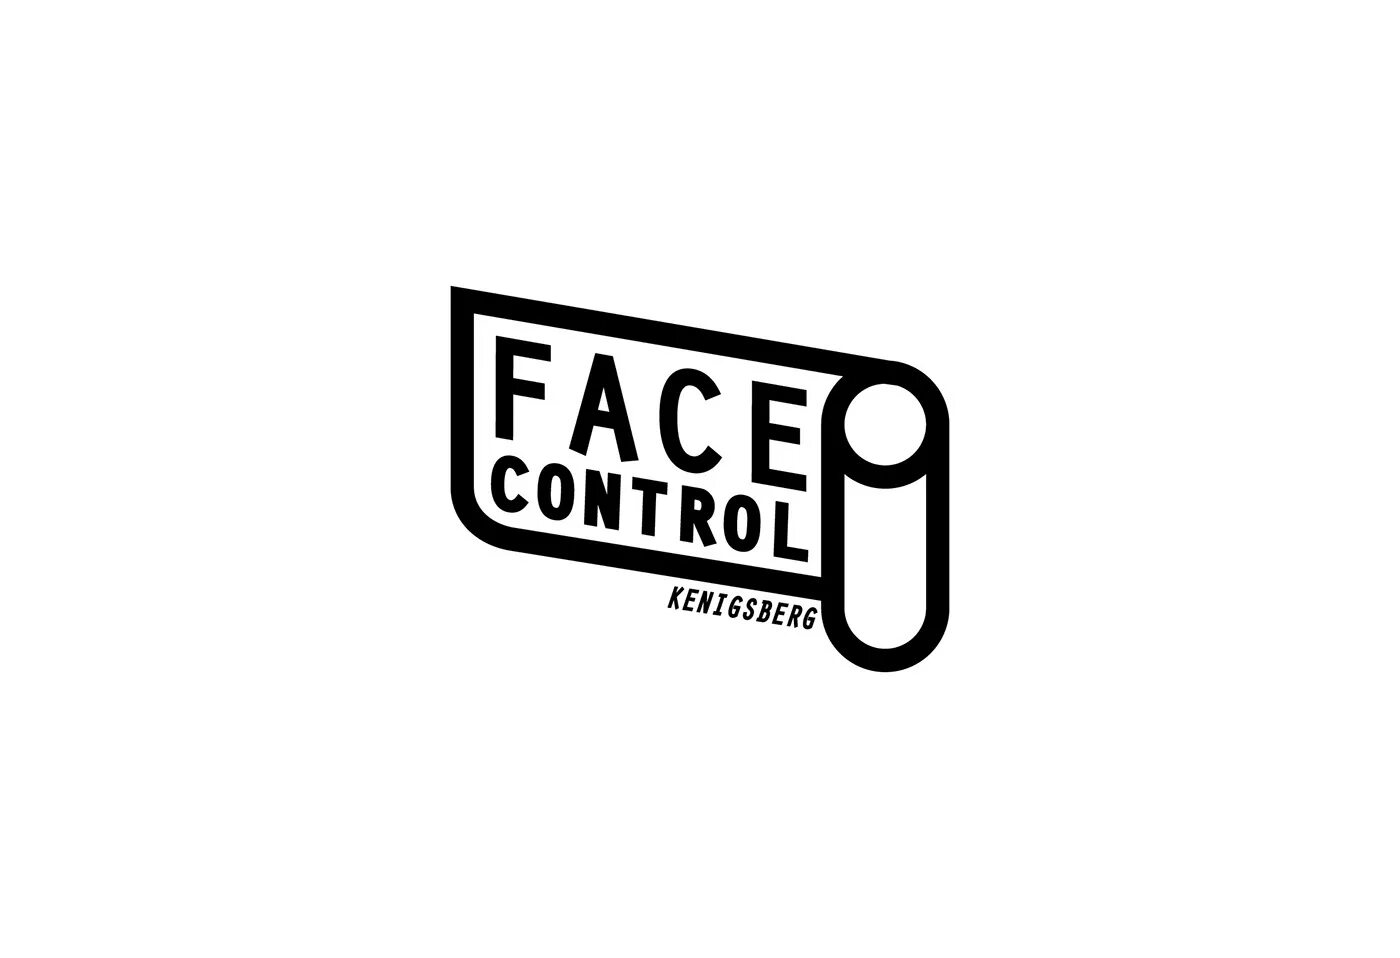 Face Control. Face Control logo. EMI Controls логотип. Логотип Dress code face Control. Steady control